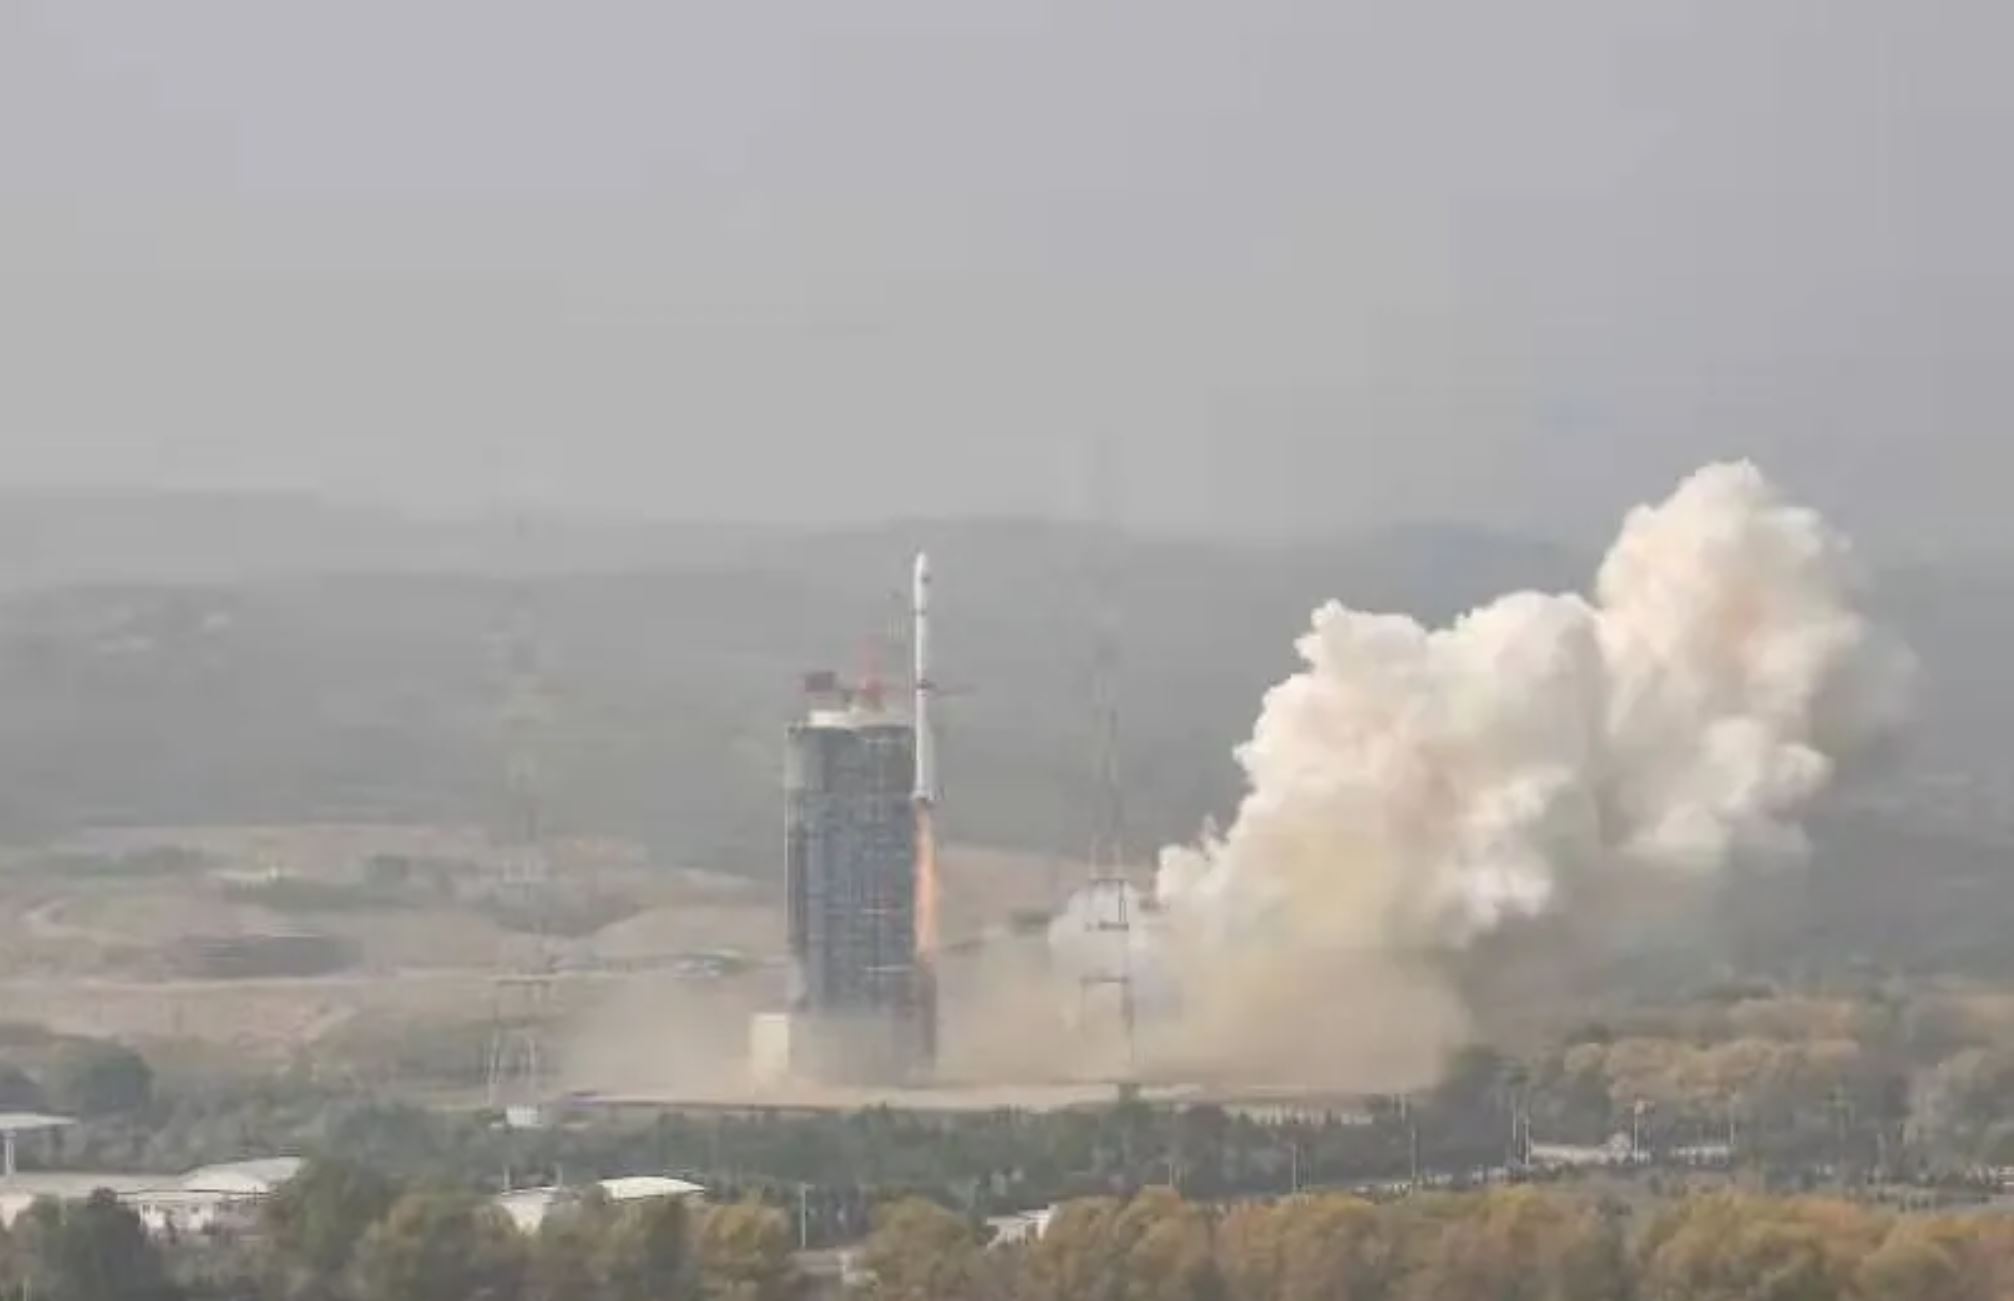 Secretive Chinese launch sends two remote sensing satellites into orbit - SpaceNews